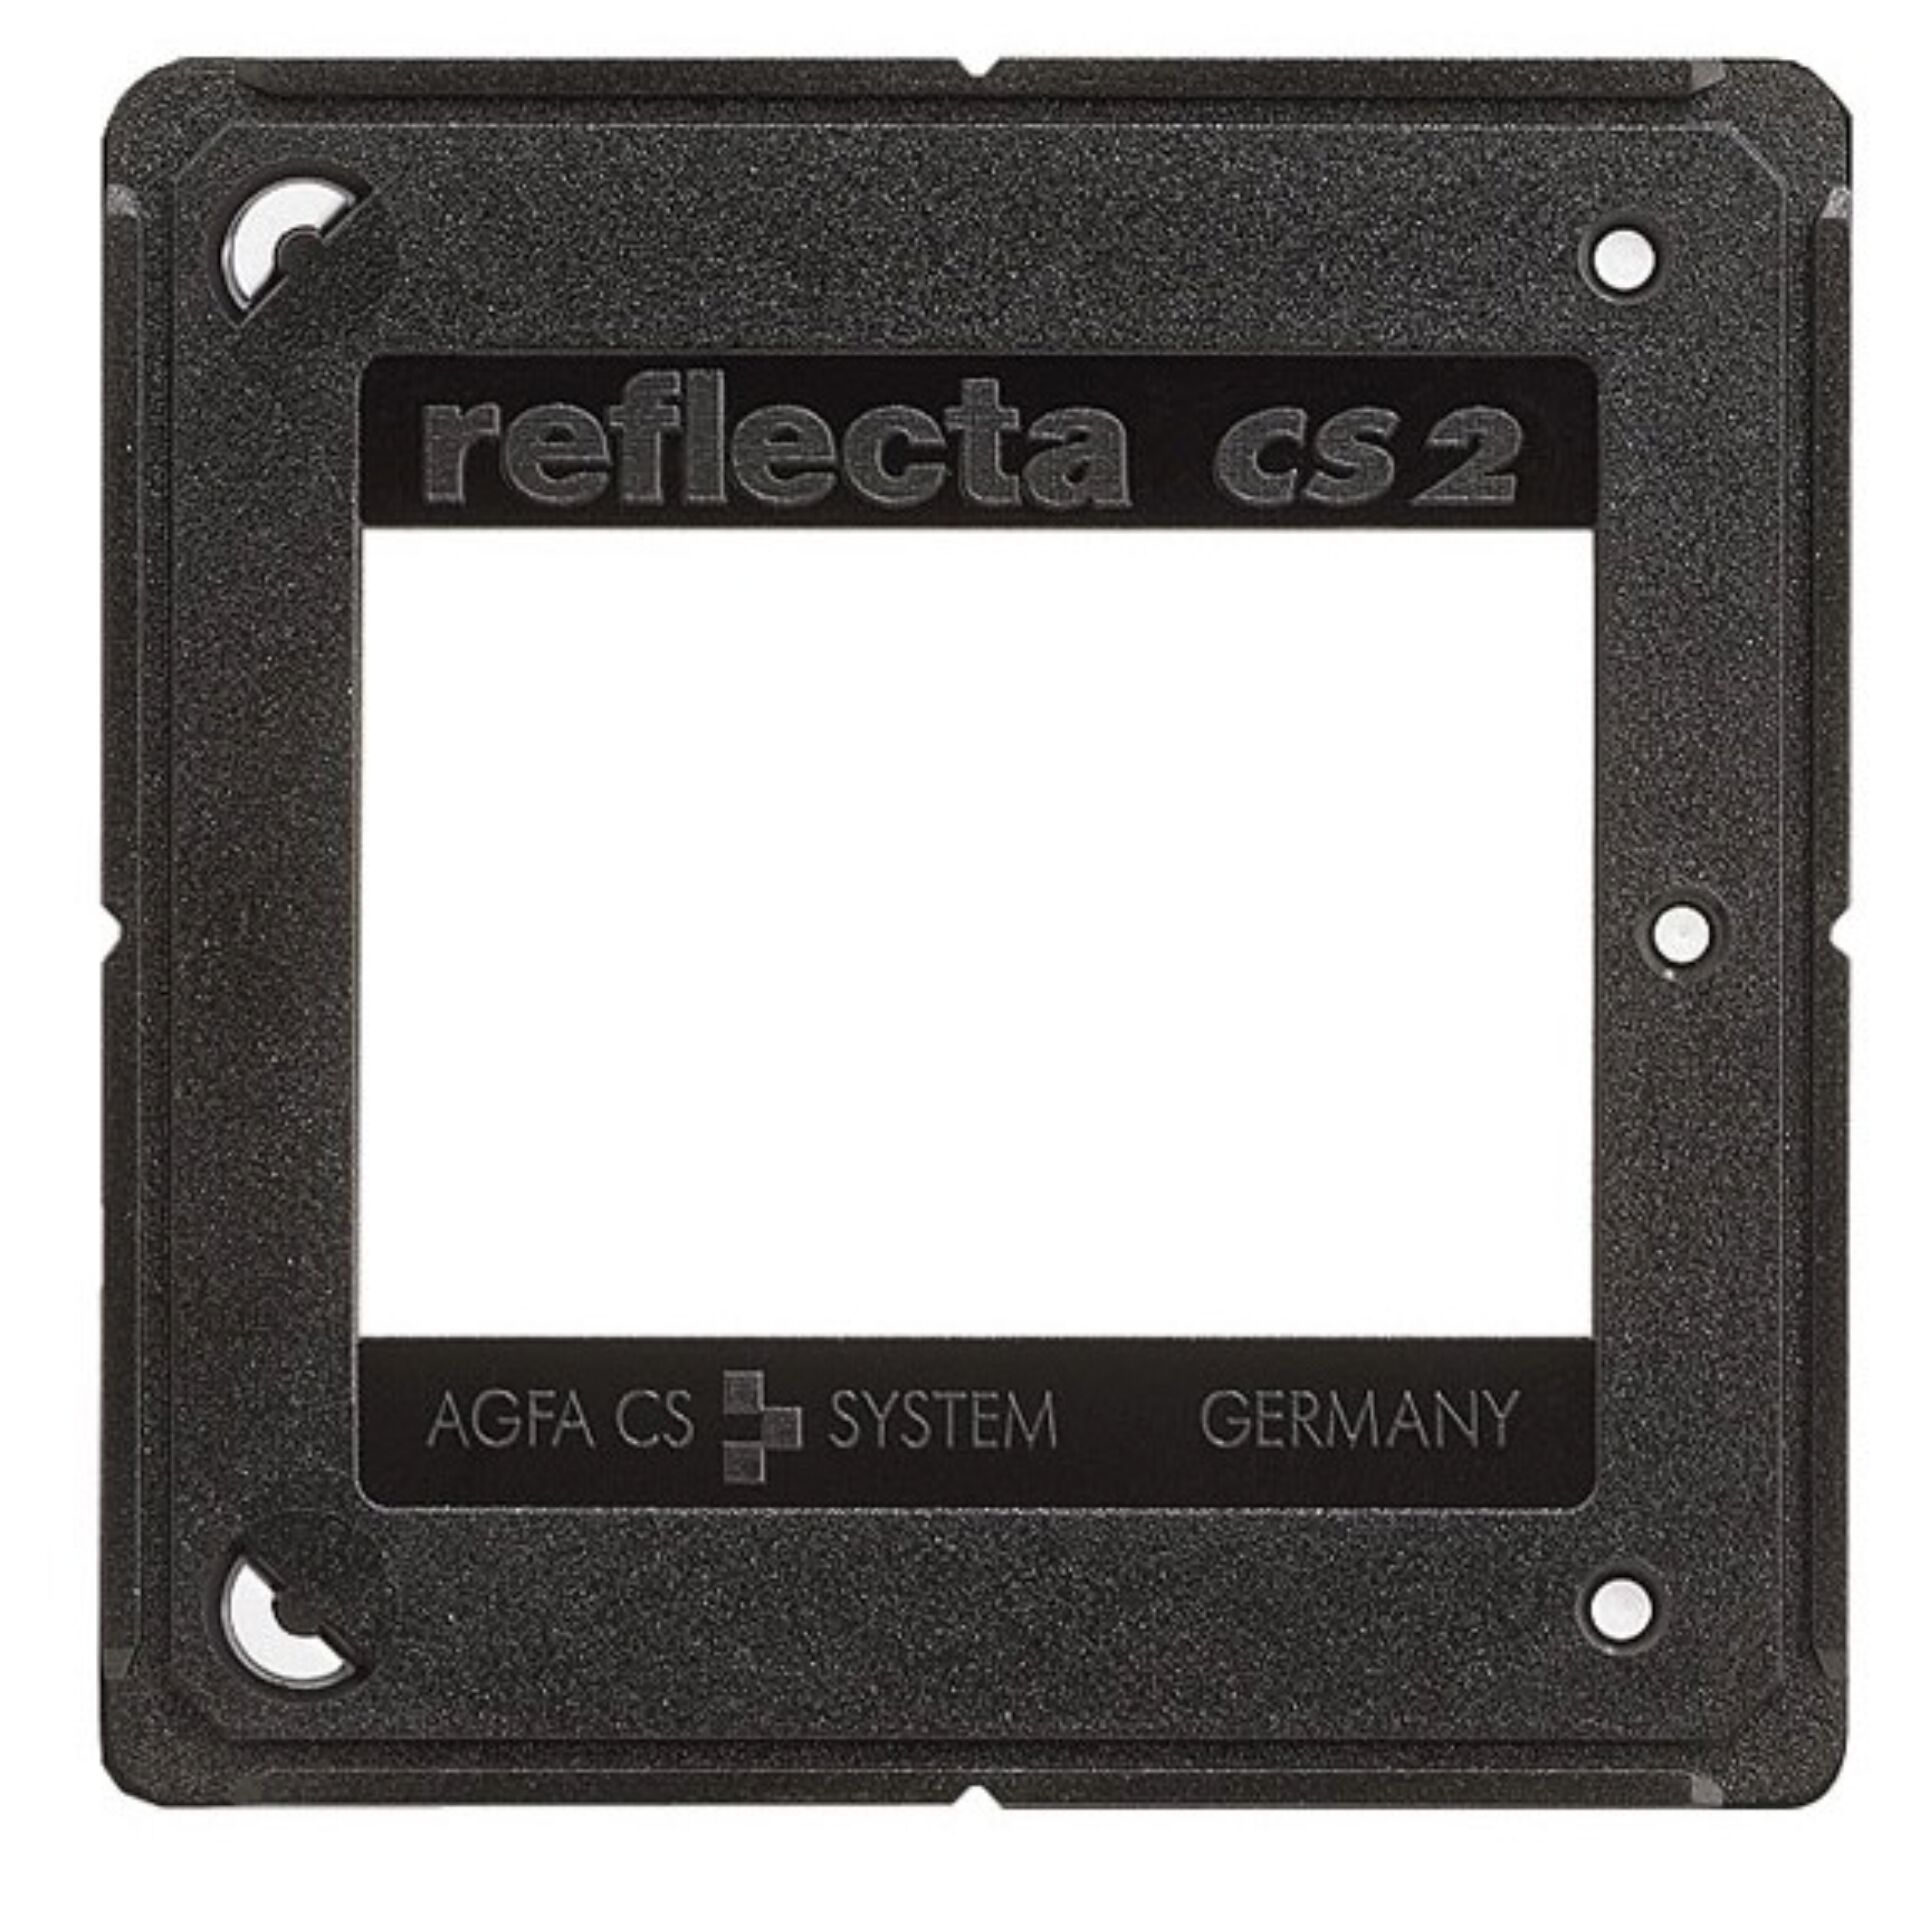 Reflecta CS slide mounts